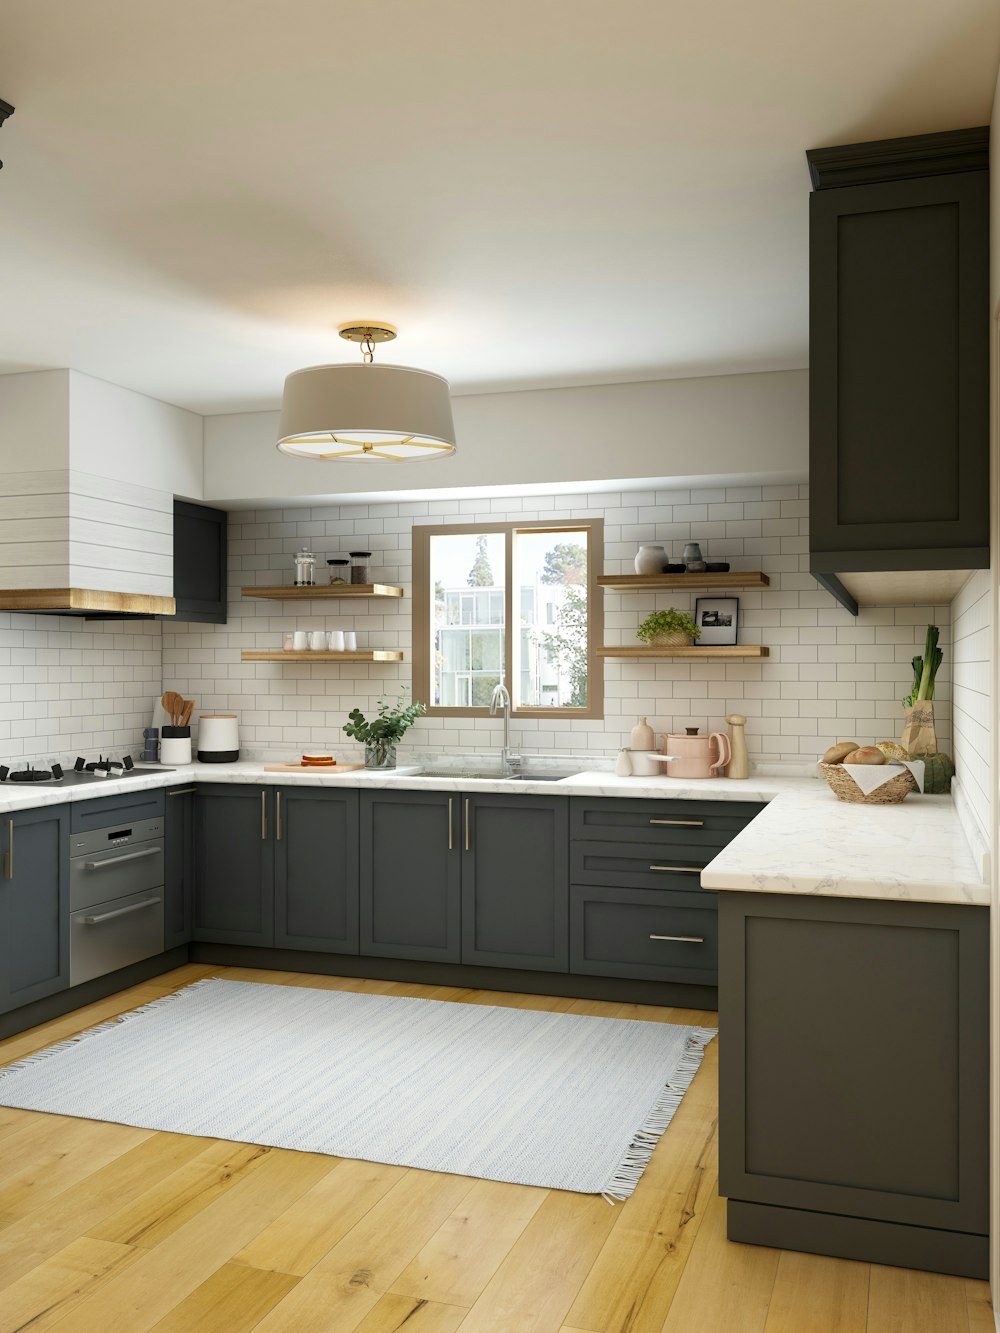 25+ Kitchen Design Pictures   Download Free Images on Unsplash